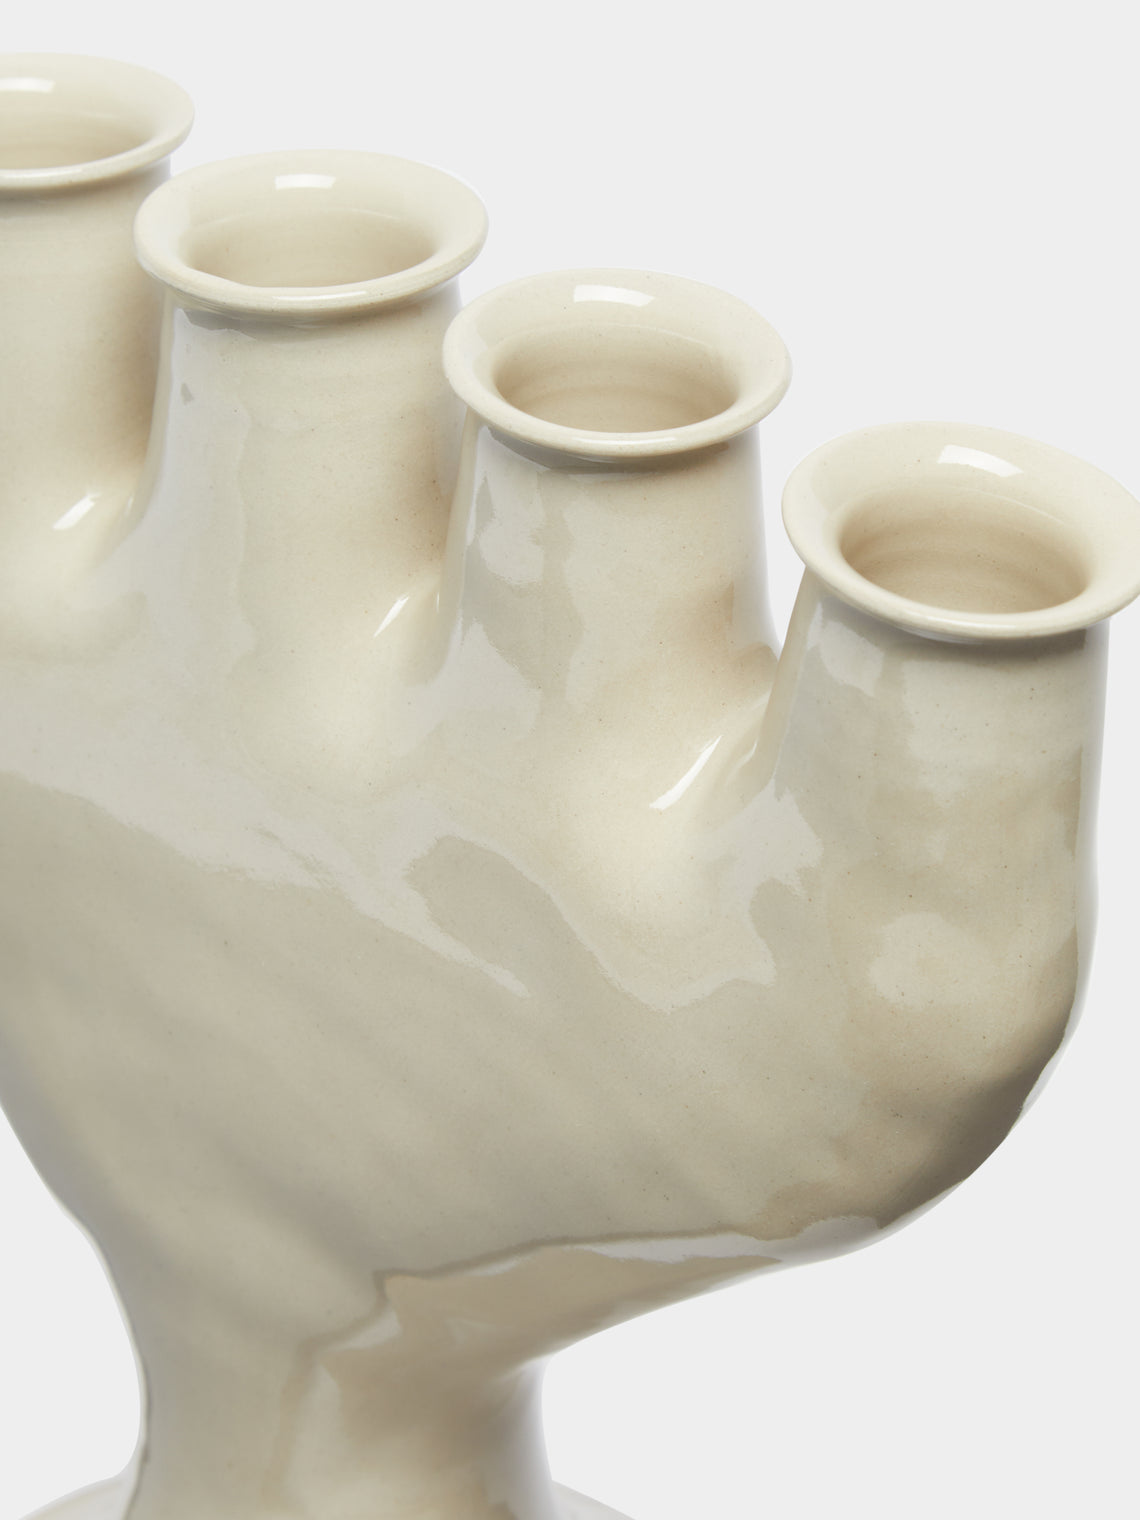 Ali Hewson - Five-Spouted Hand Ceramic Vase -  - ABASK